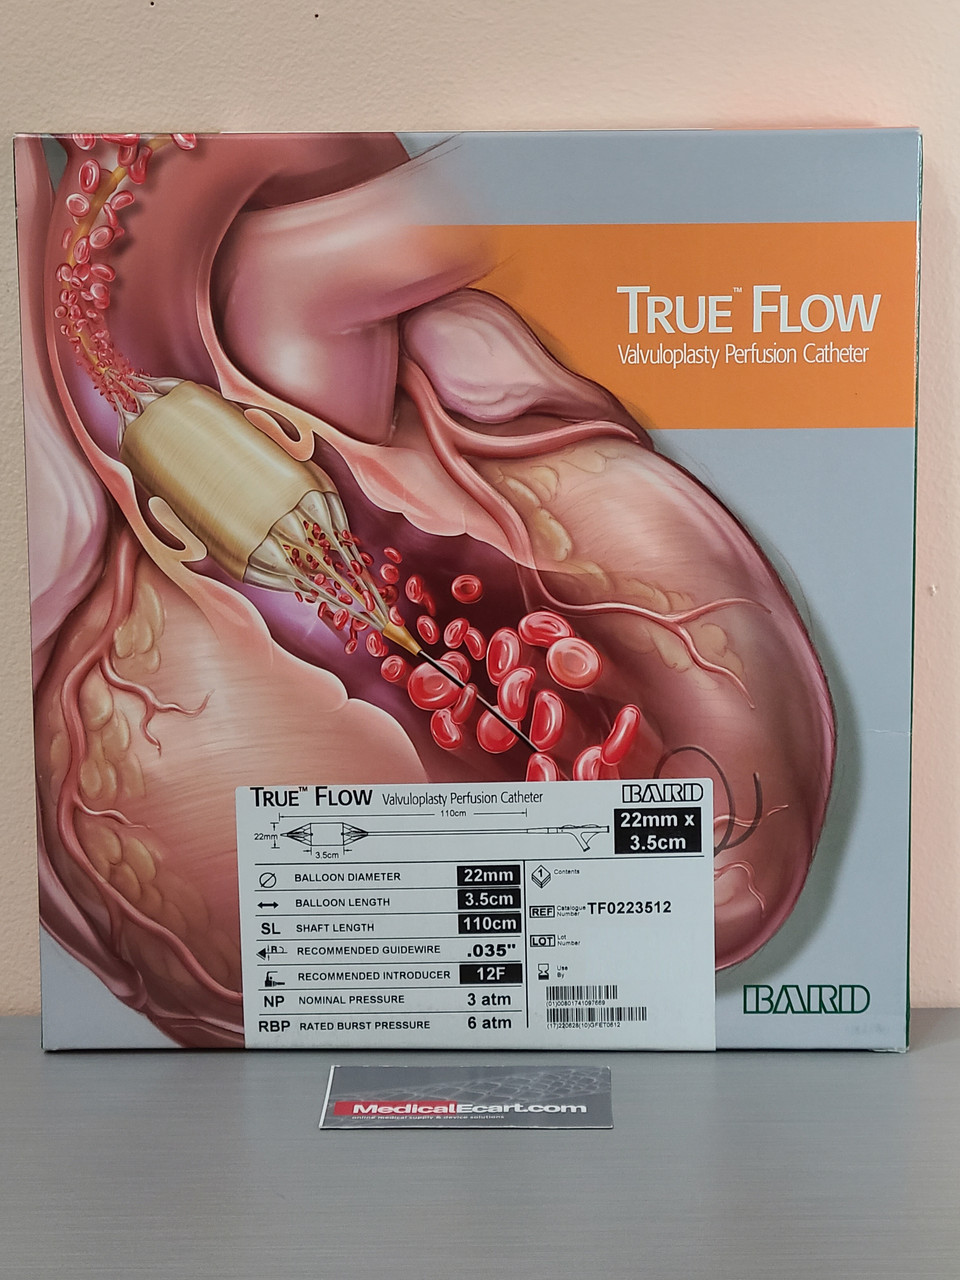 Bard TF0223512 TRUE® Flow Valvuloplasty Perfusion Catheter, 18 mm x 3.5 cm,  110 cm